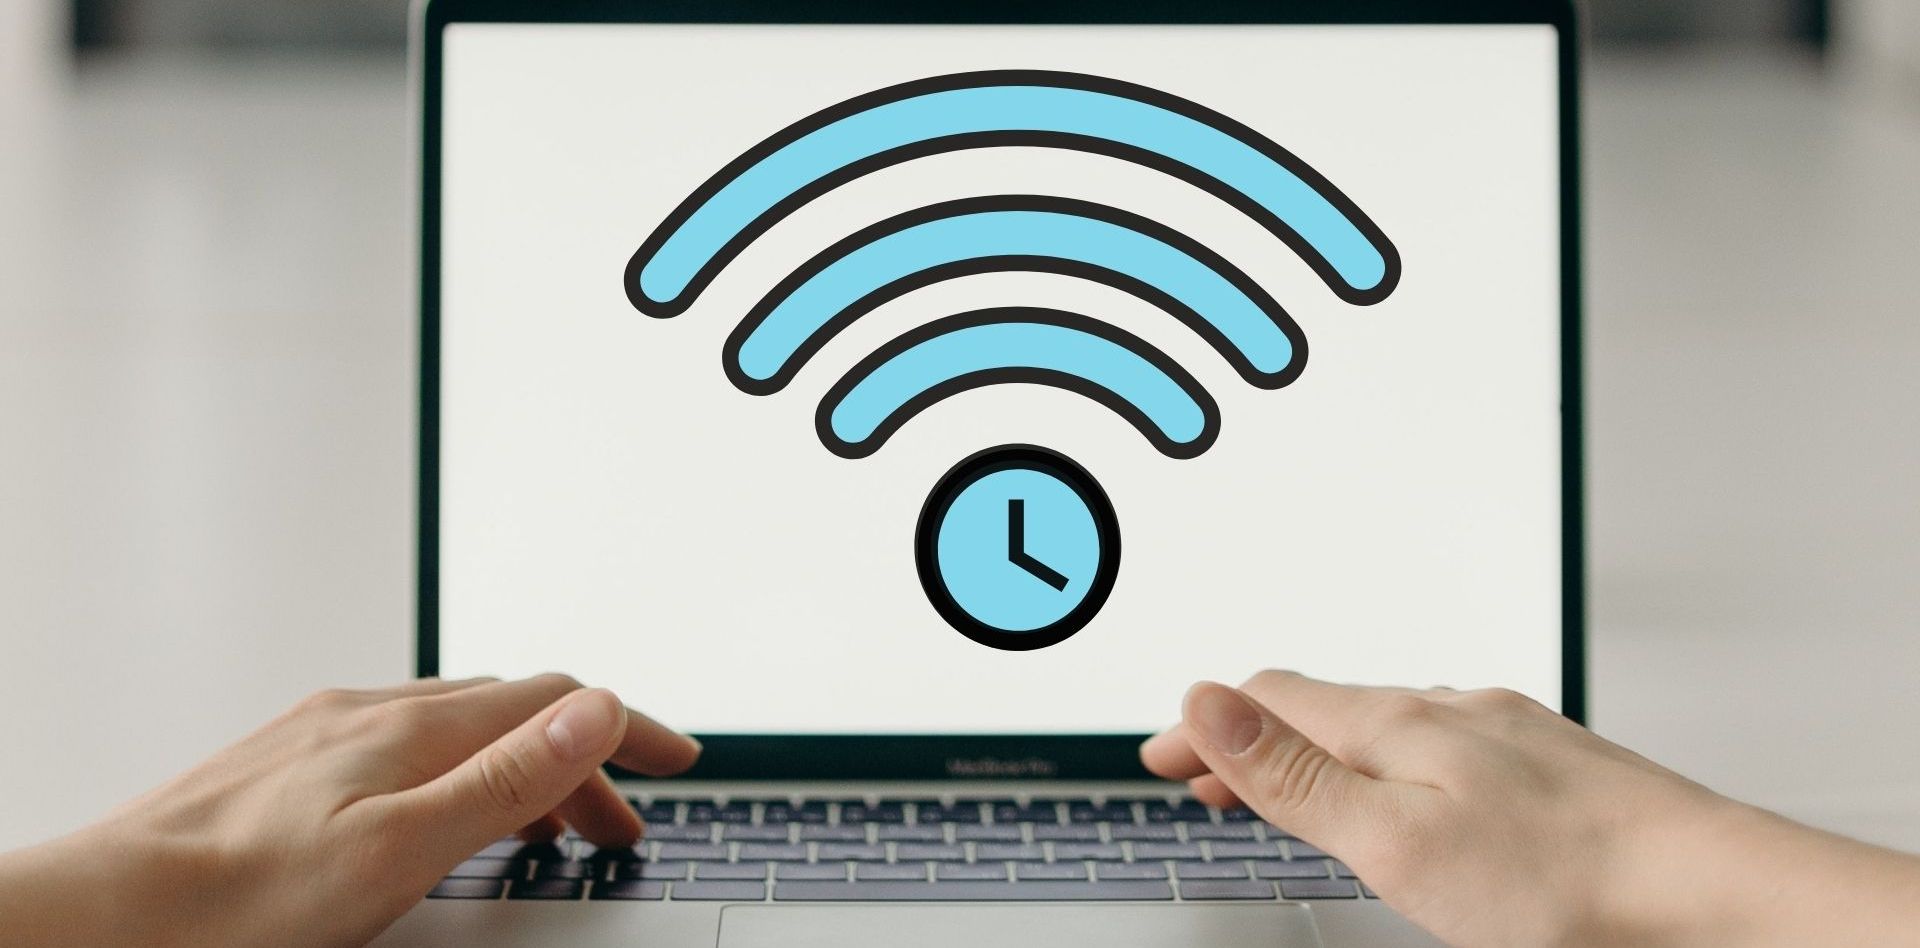 wifi and clock logo on laptop screen